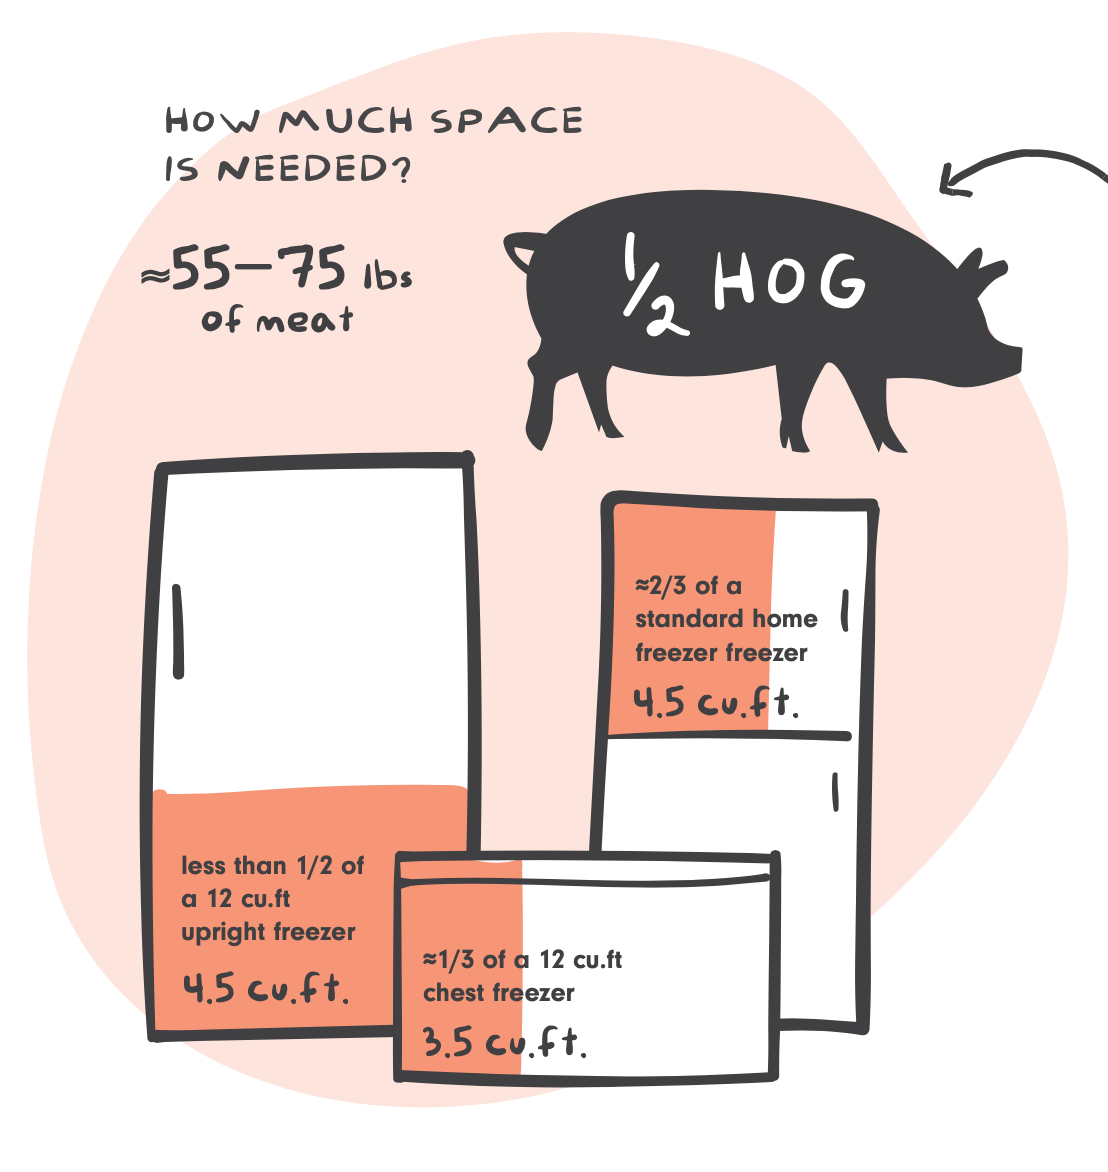 QUARTER Hog Share- DEPOSIT